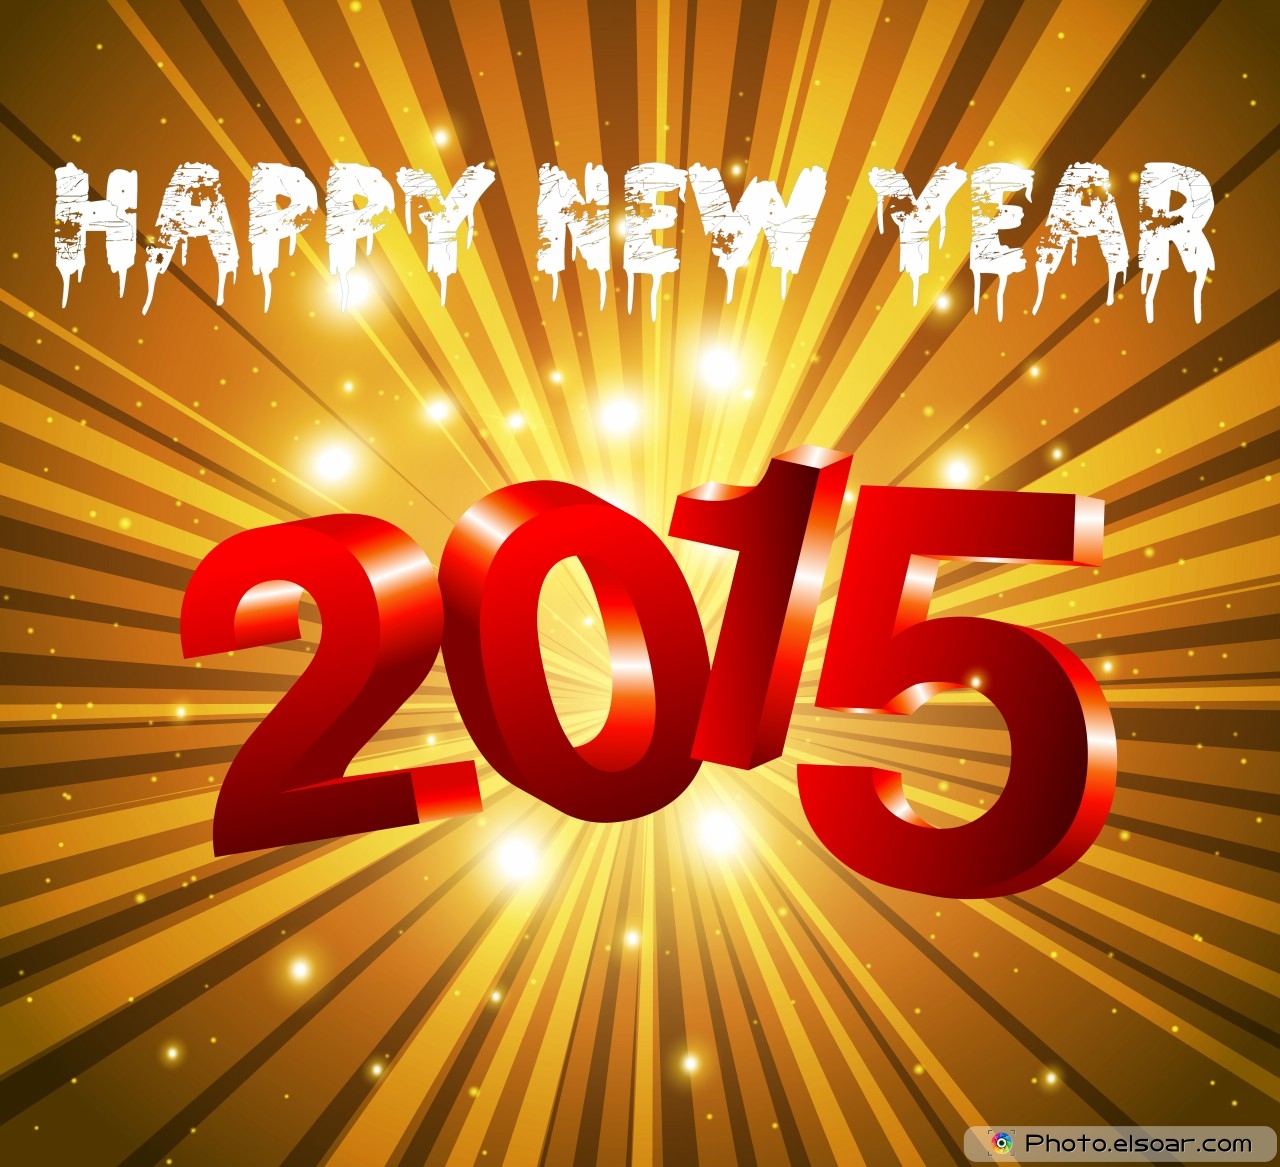 Happy New Year 2015 Free HD Wallpapers Elsoar